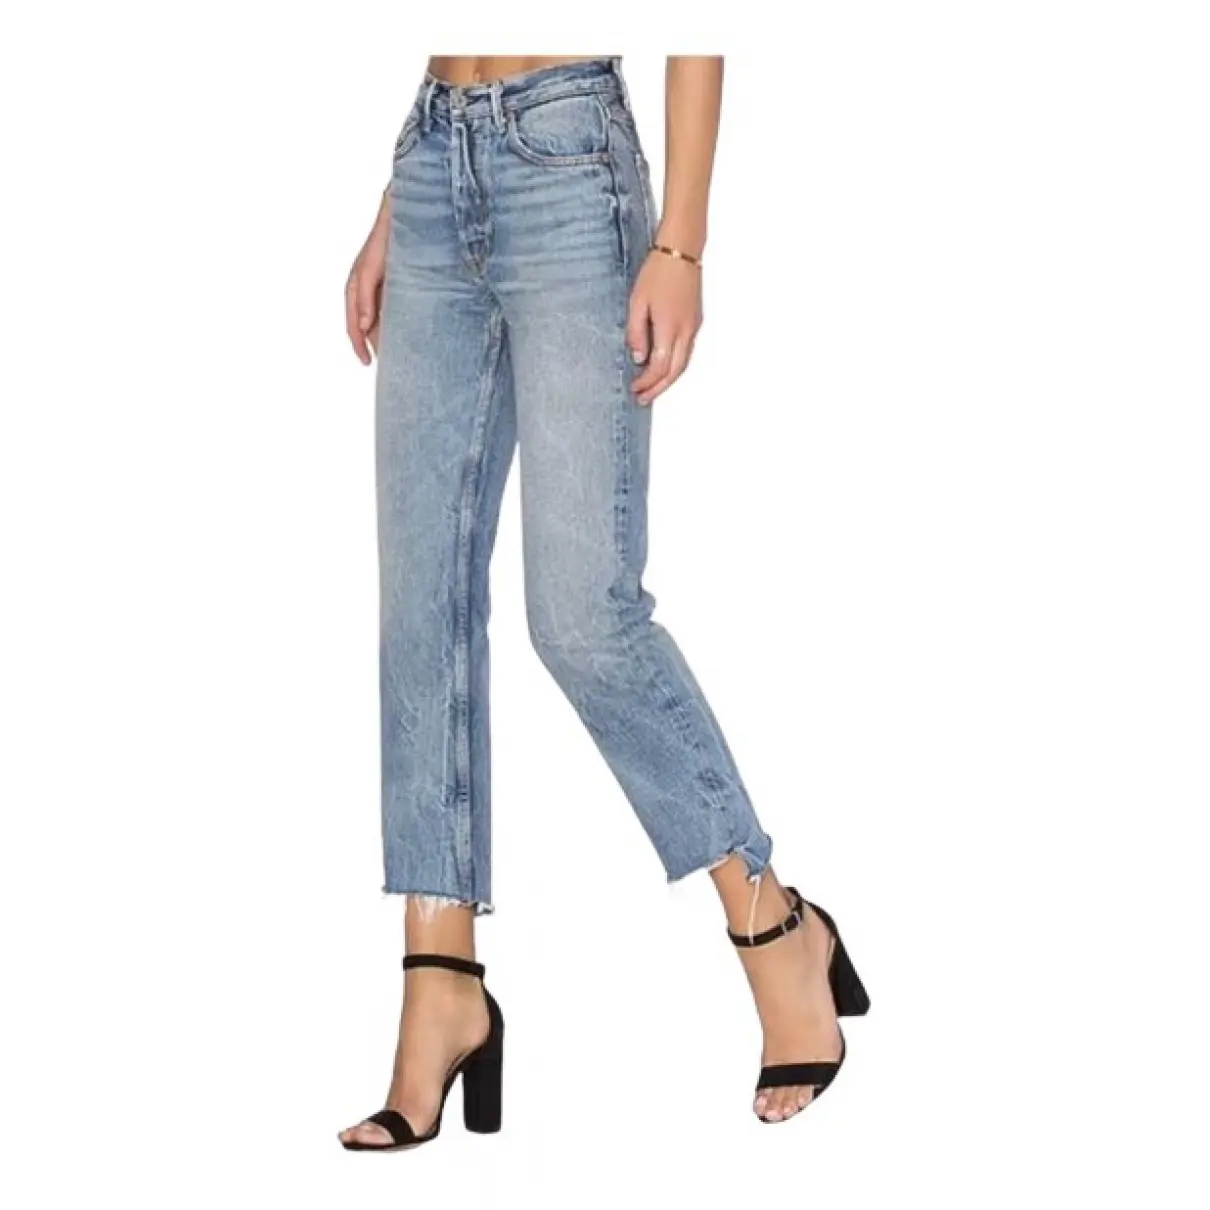 Buy Grlfrnd Blue Cotton Jeans online